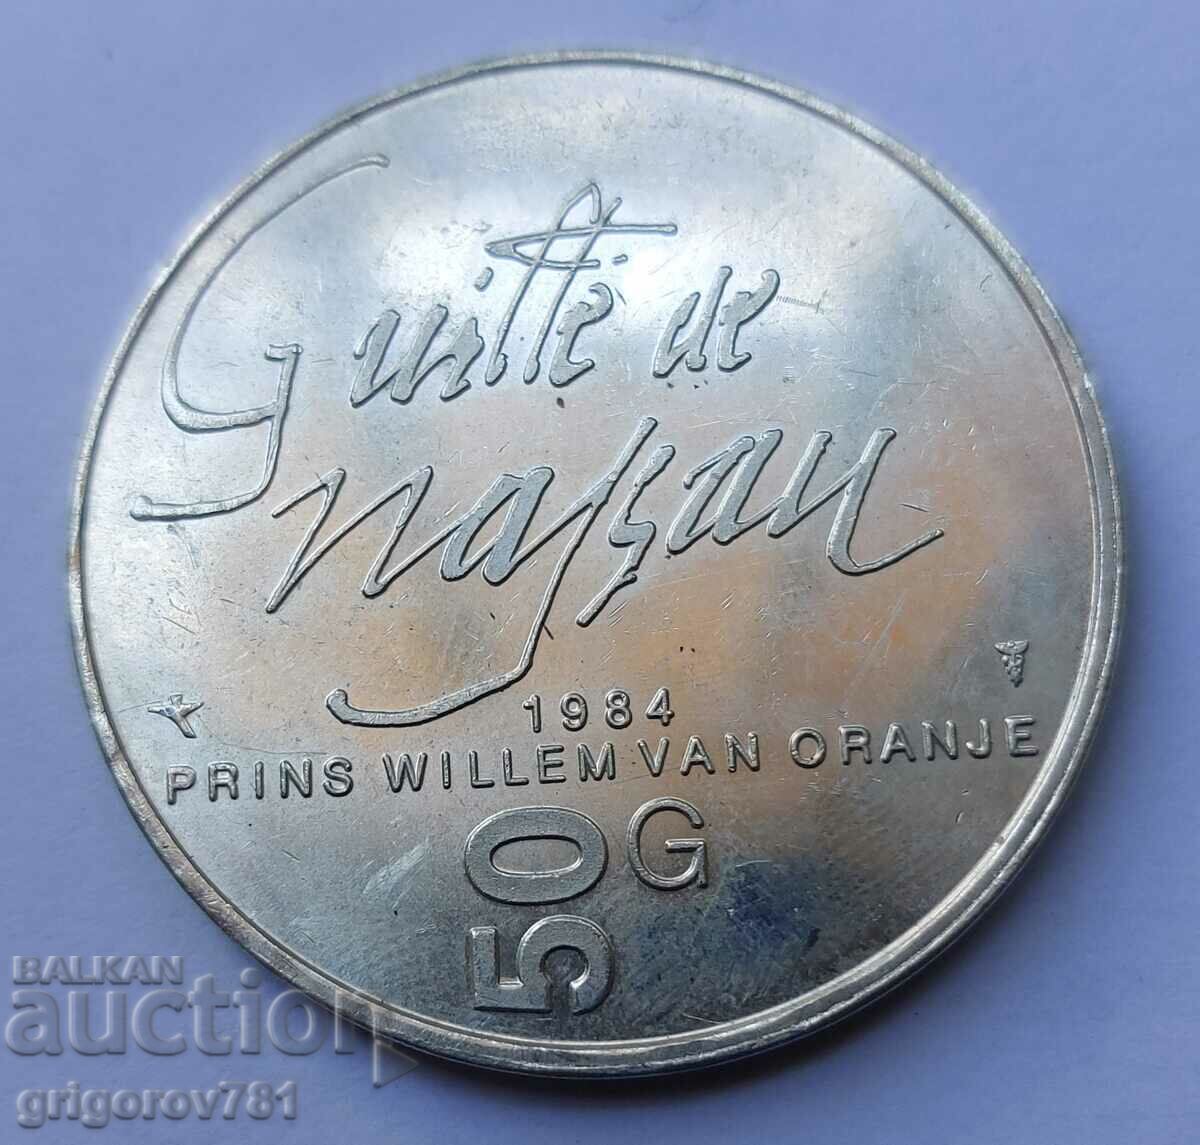 50 Guilder Silver Netherlands 1984 - Silver Coin #7